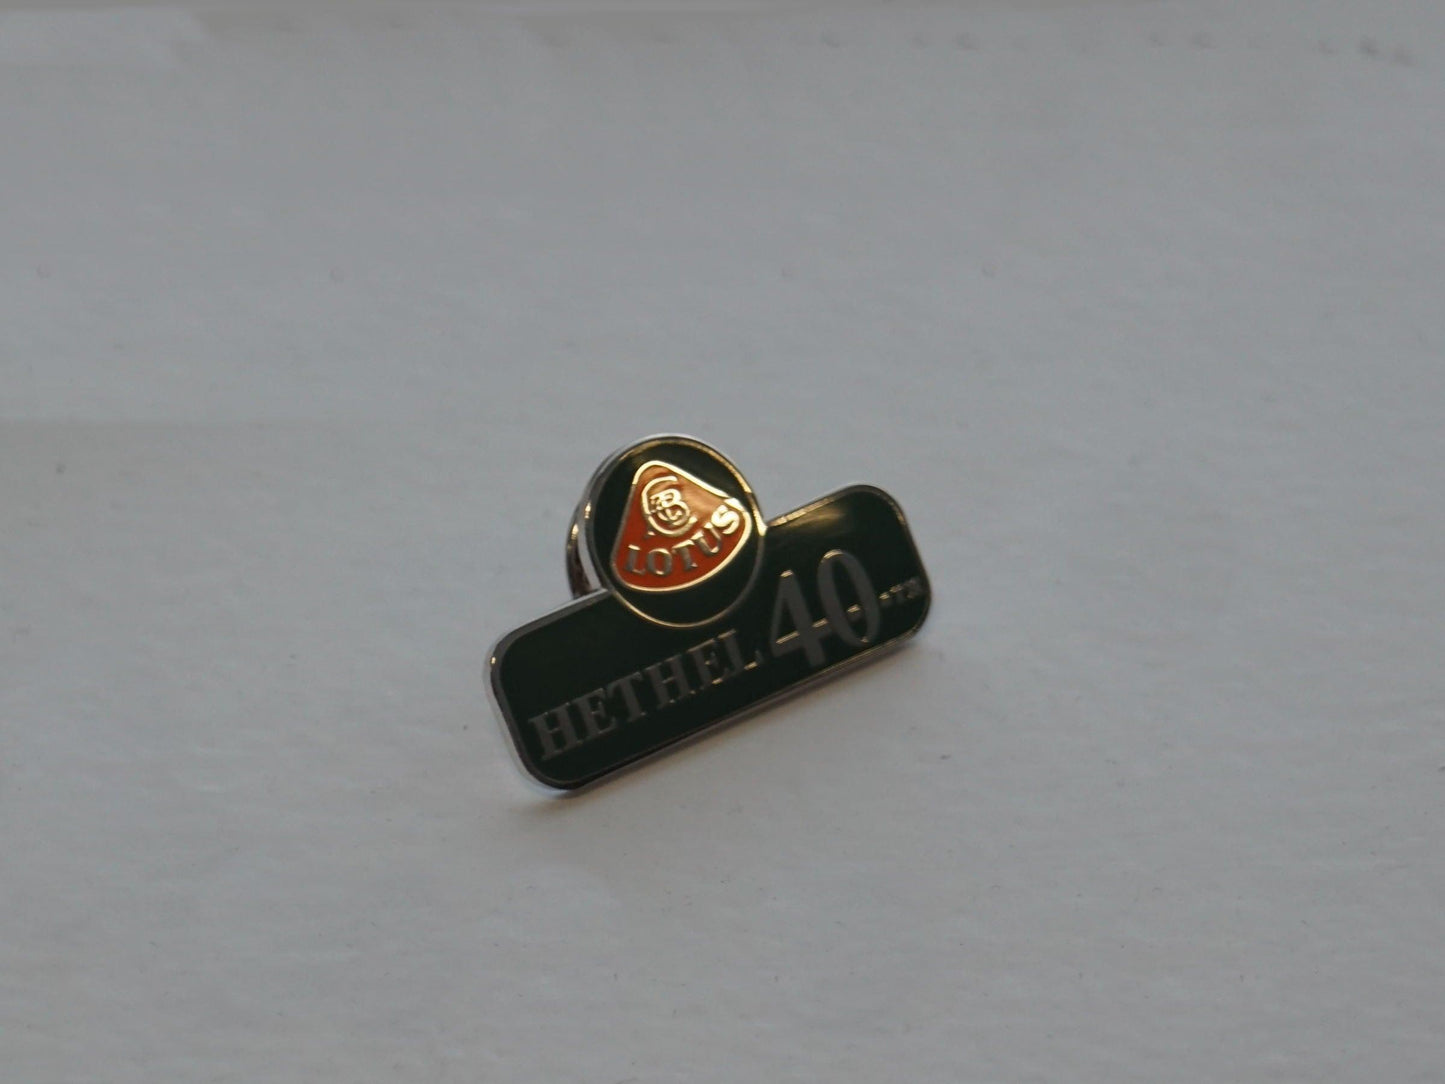 Hethel 40th Anniversary Pin Badge - Lotus Silverstone